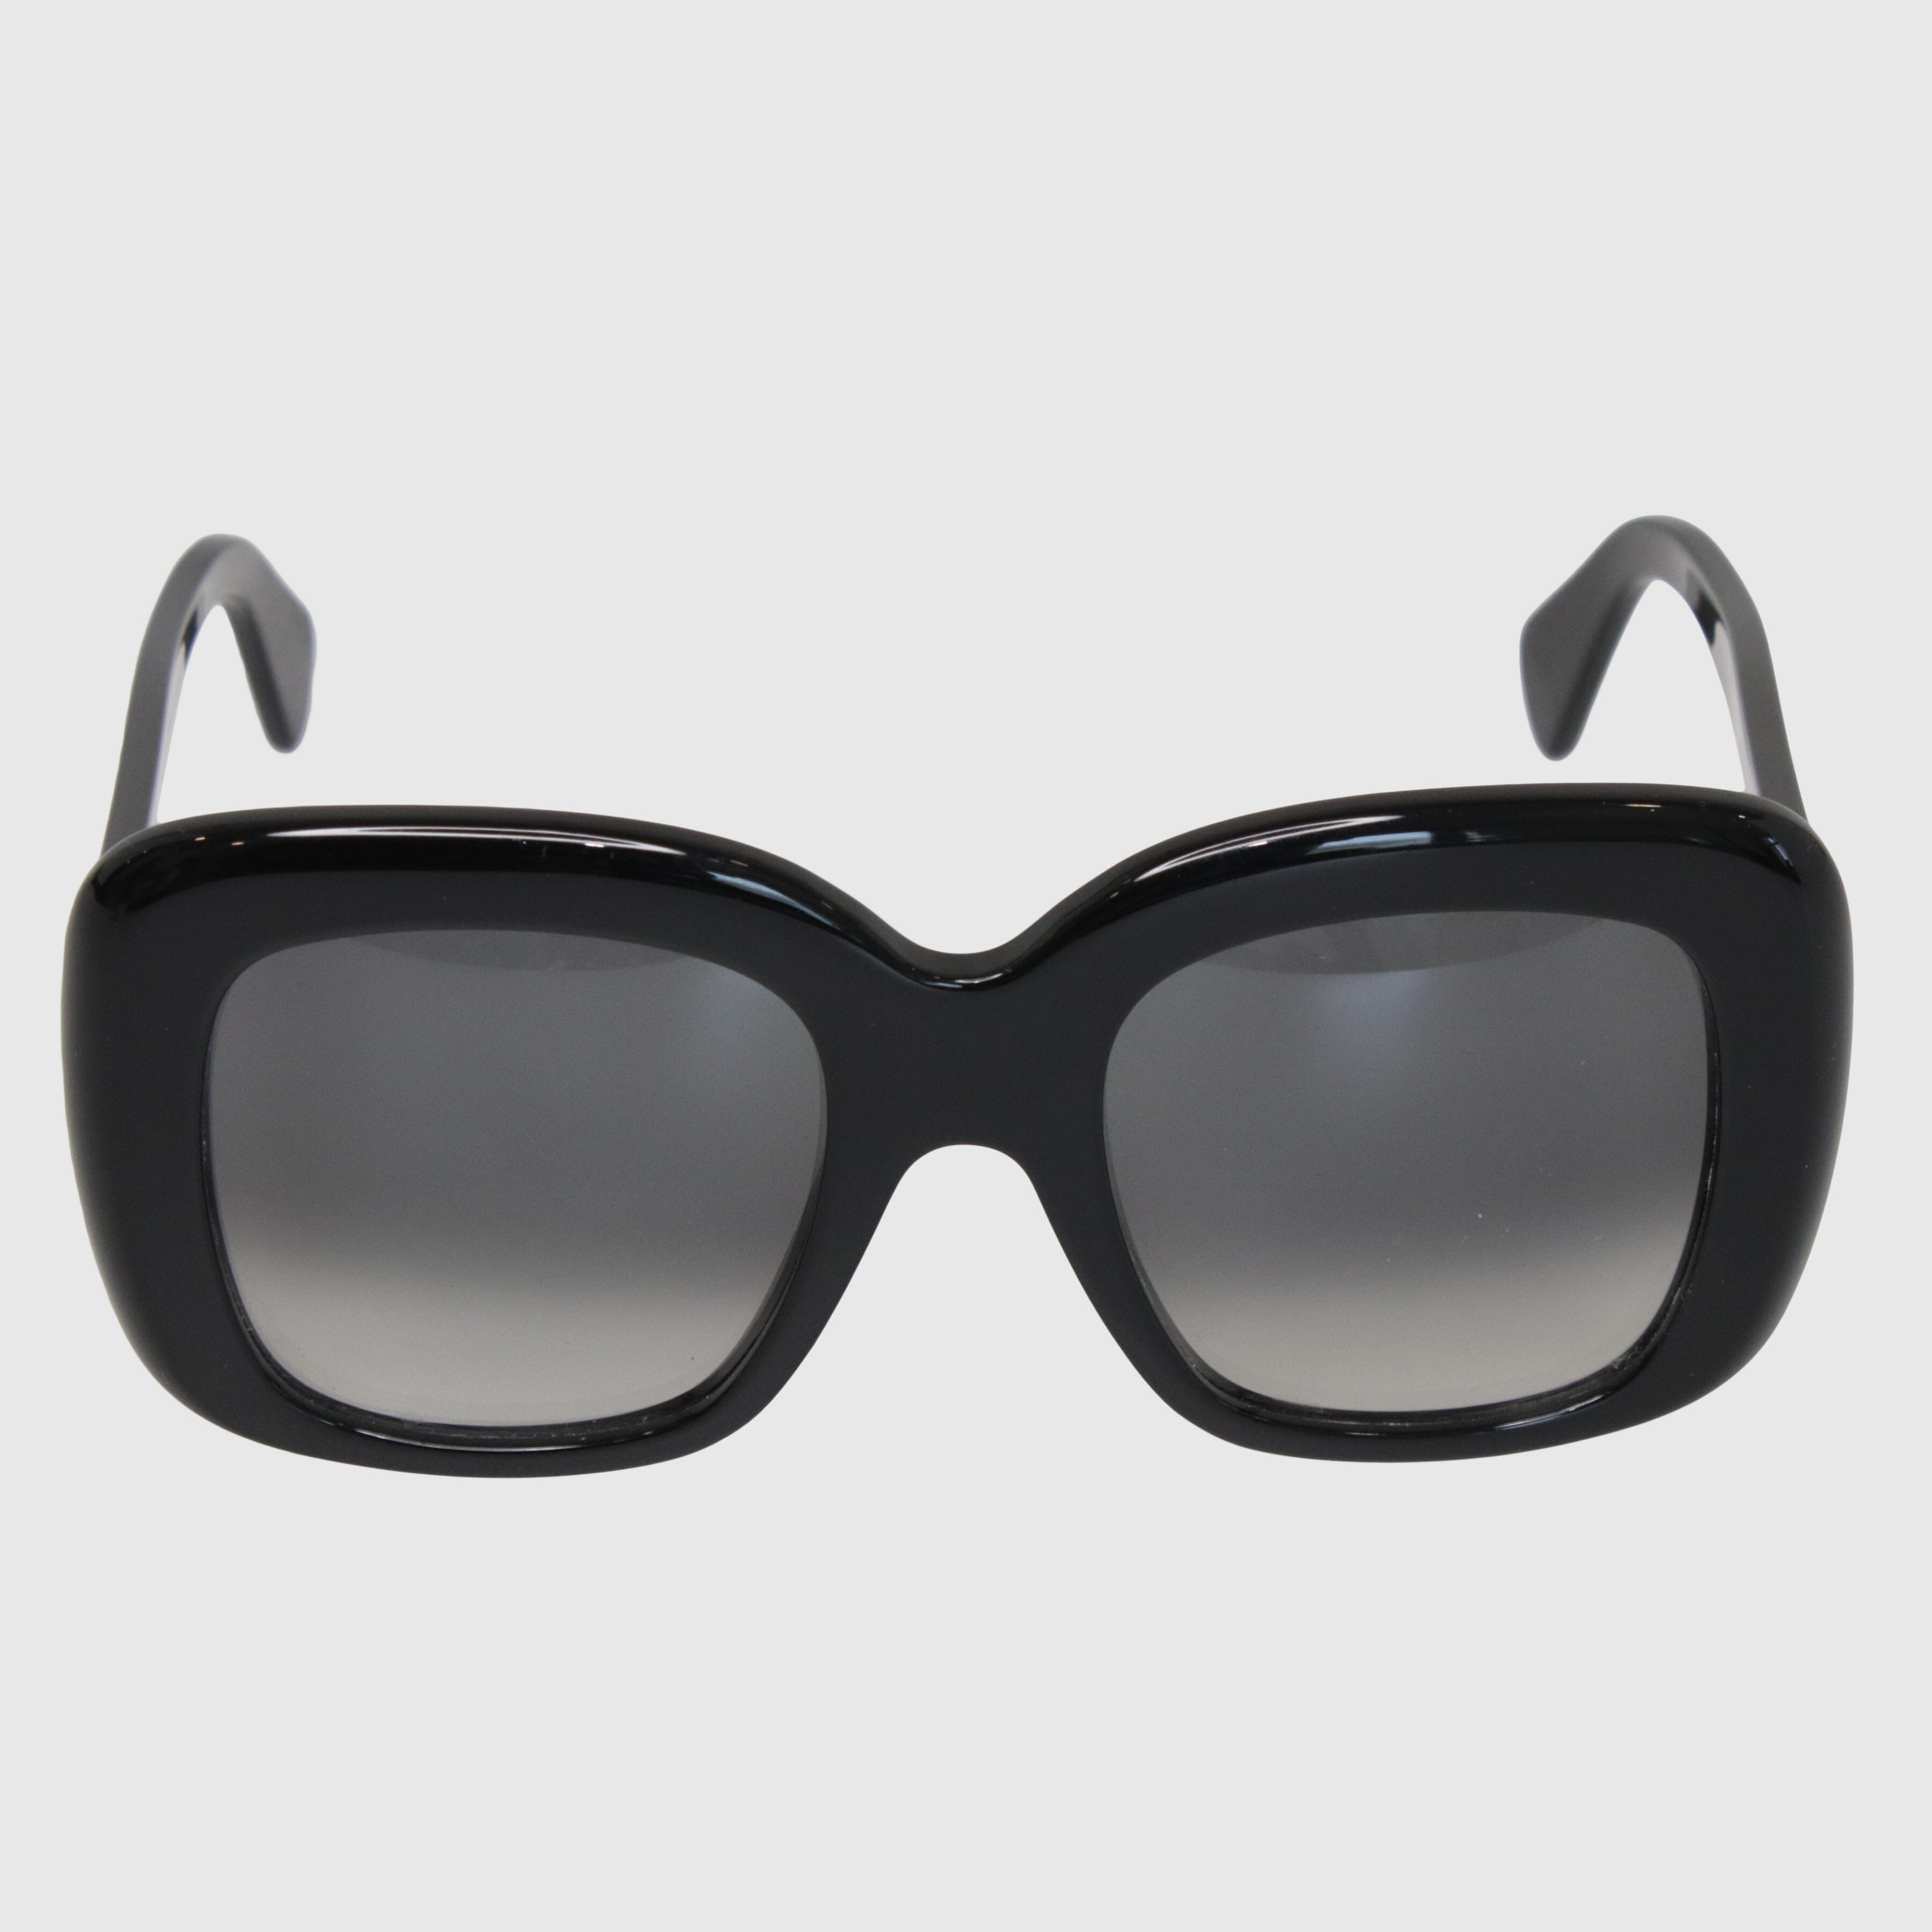 Black Oversized Square Frame Sunglasses - CL 41433/S